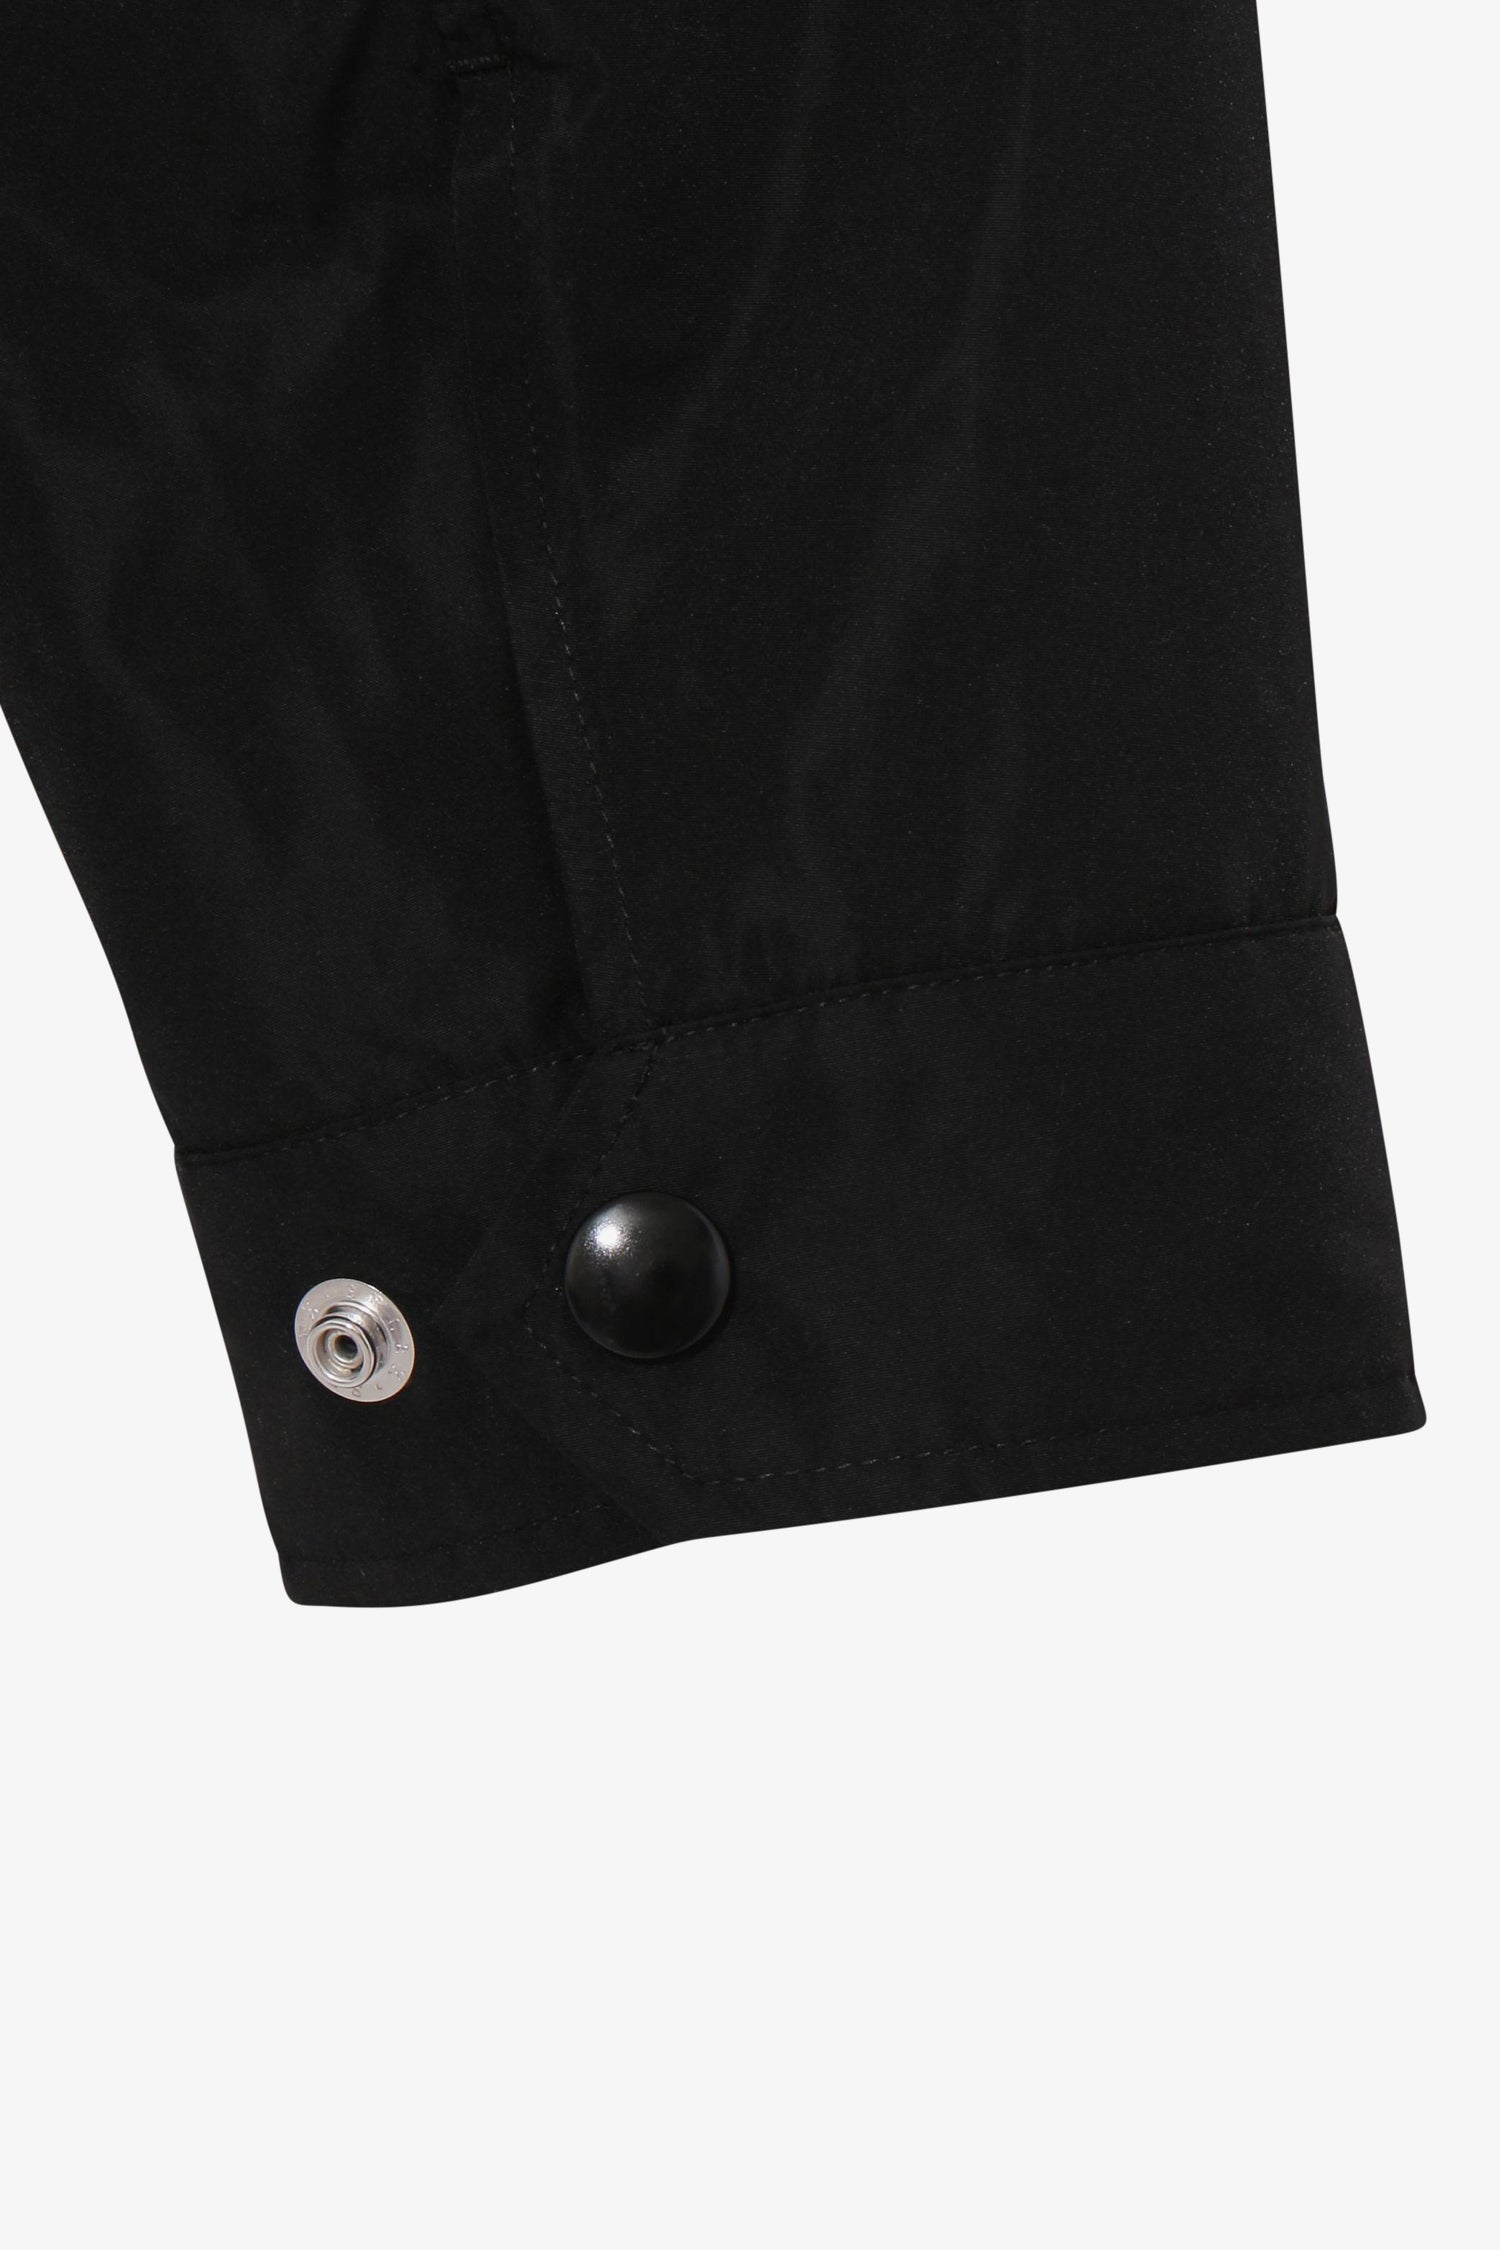 Selectshop FRAME - UNDERCOVER Cindy Sherman Coach Jacket Outerwear Dubai